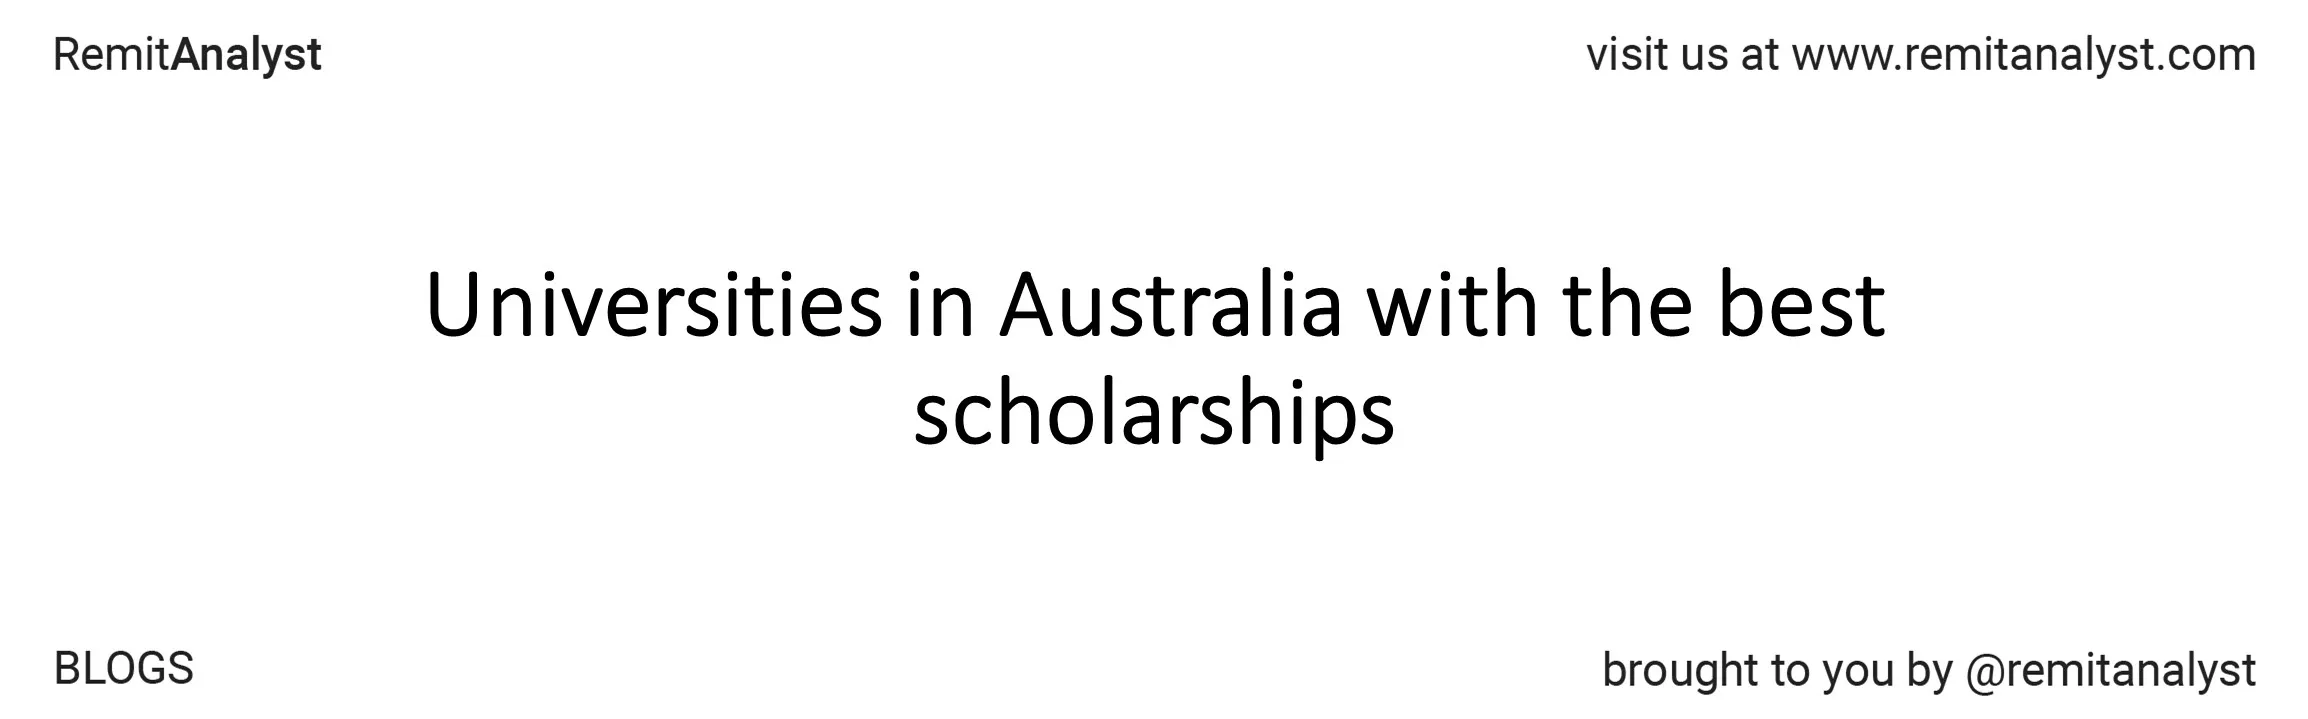 australia-universities-with-best-scholarship-title